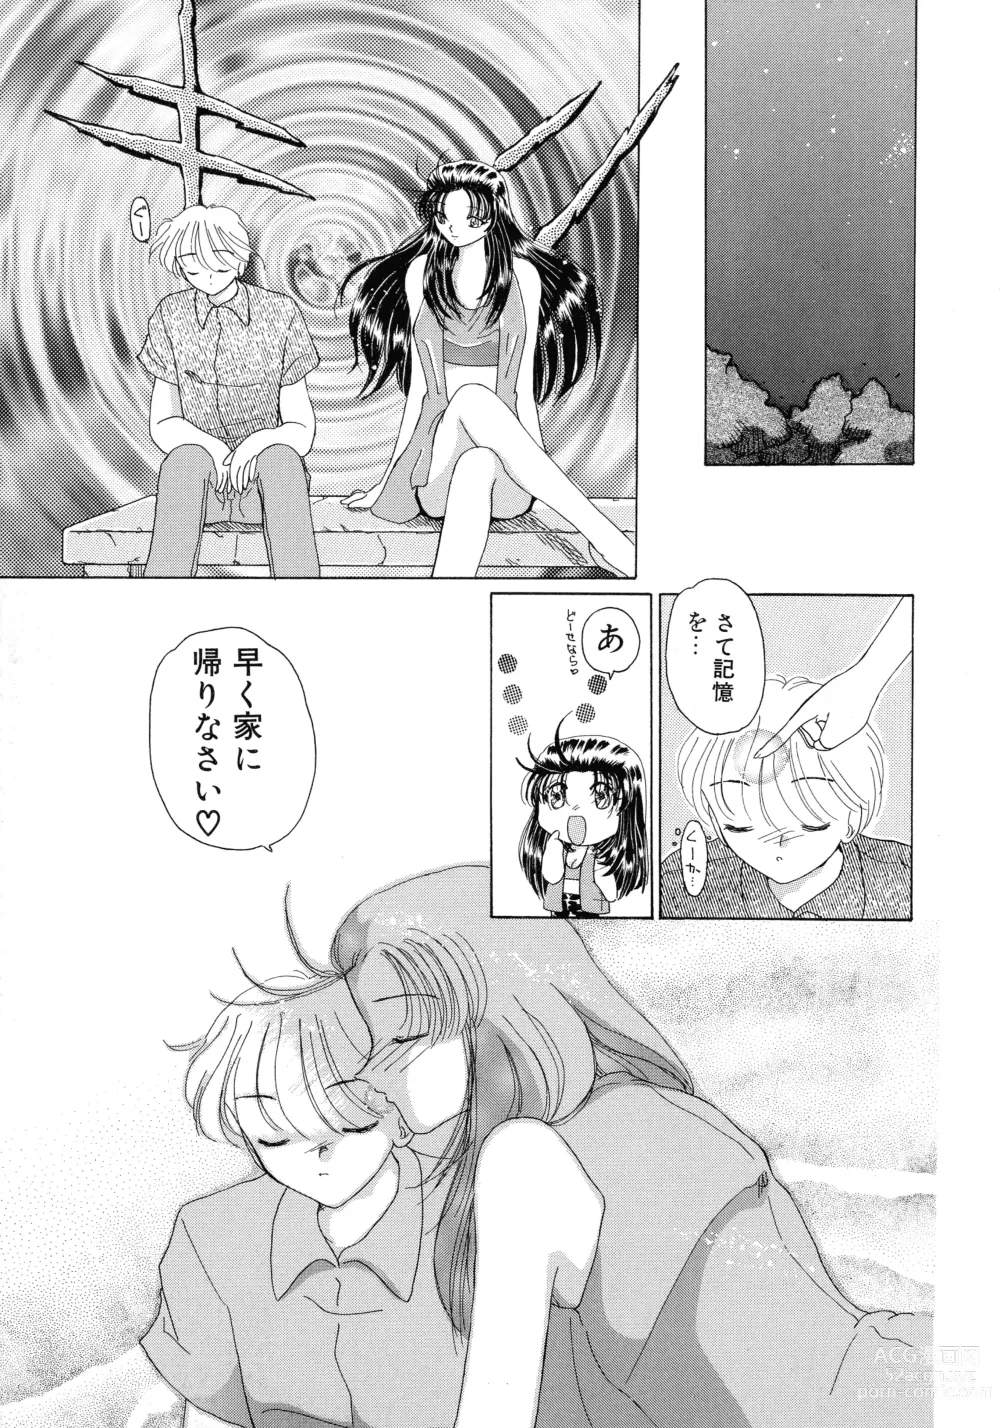 Page 143 of manga Mahou Trouble